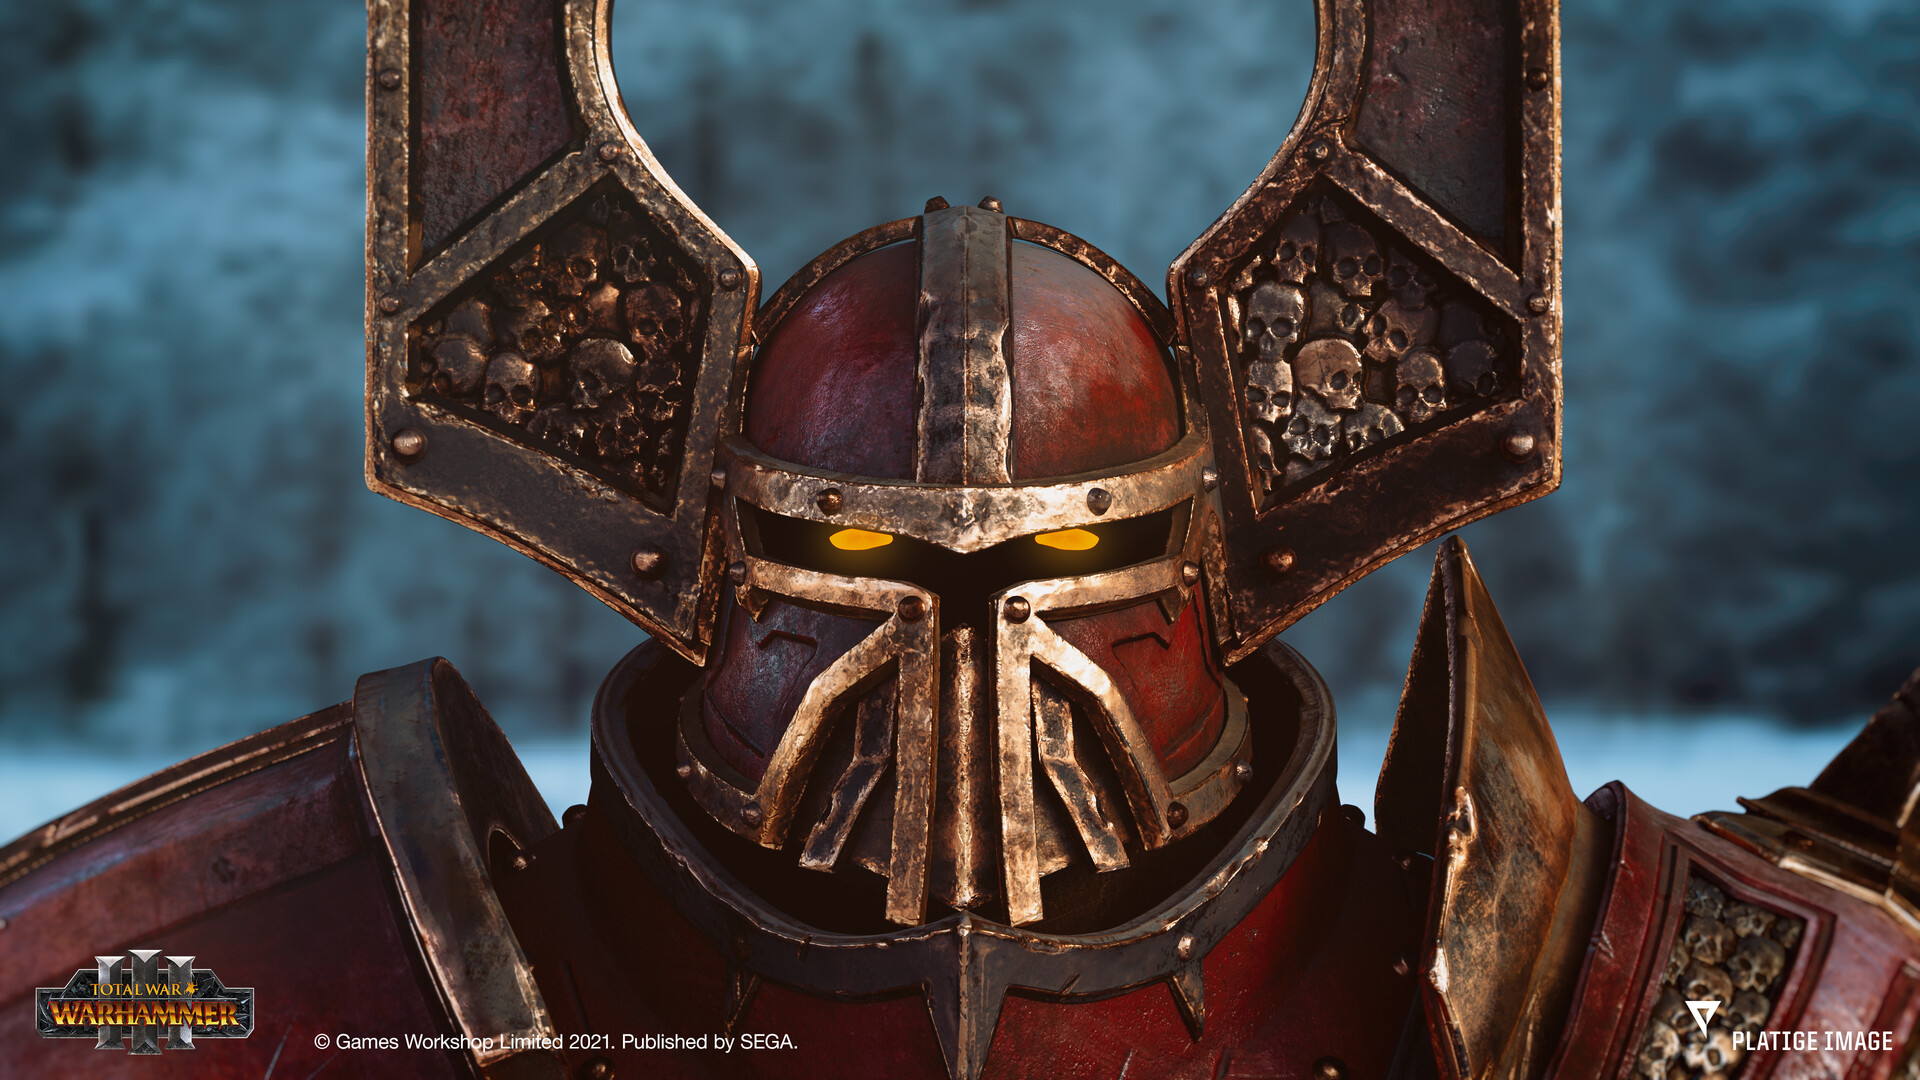 Total War WARHAMMER Iii Warhammer Skullcrushers Chaos Skull Khorne Warrior Knight Armor Helmet ArtSt 1920x1080